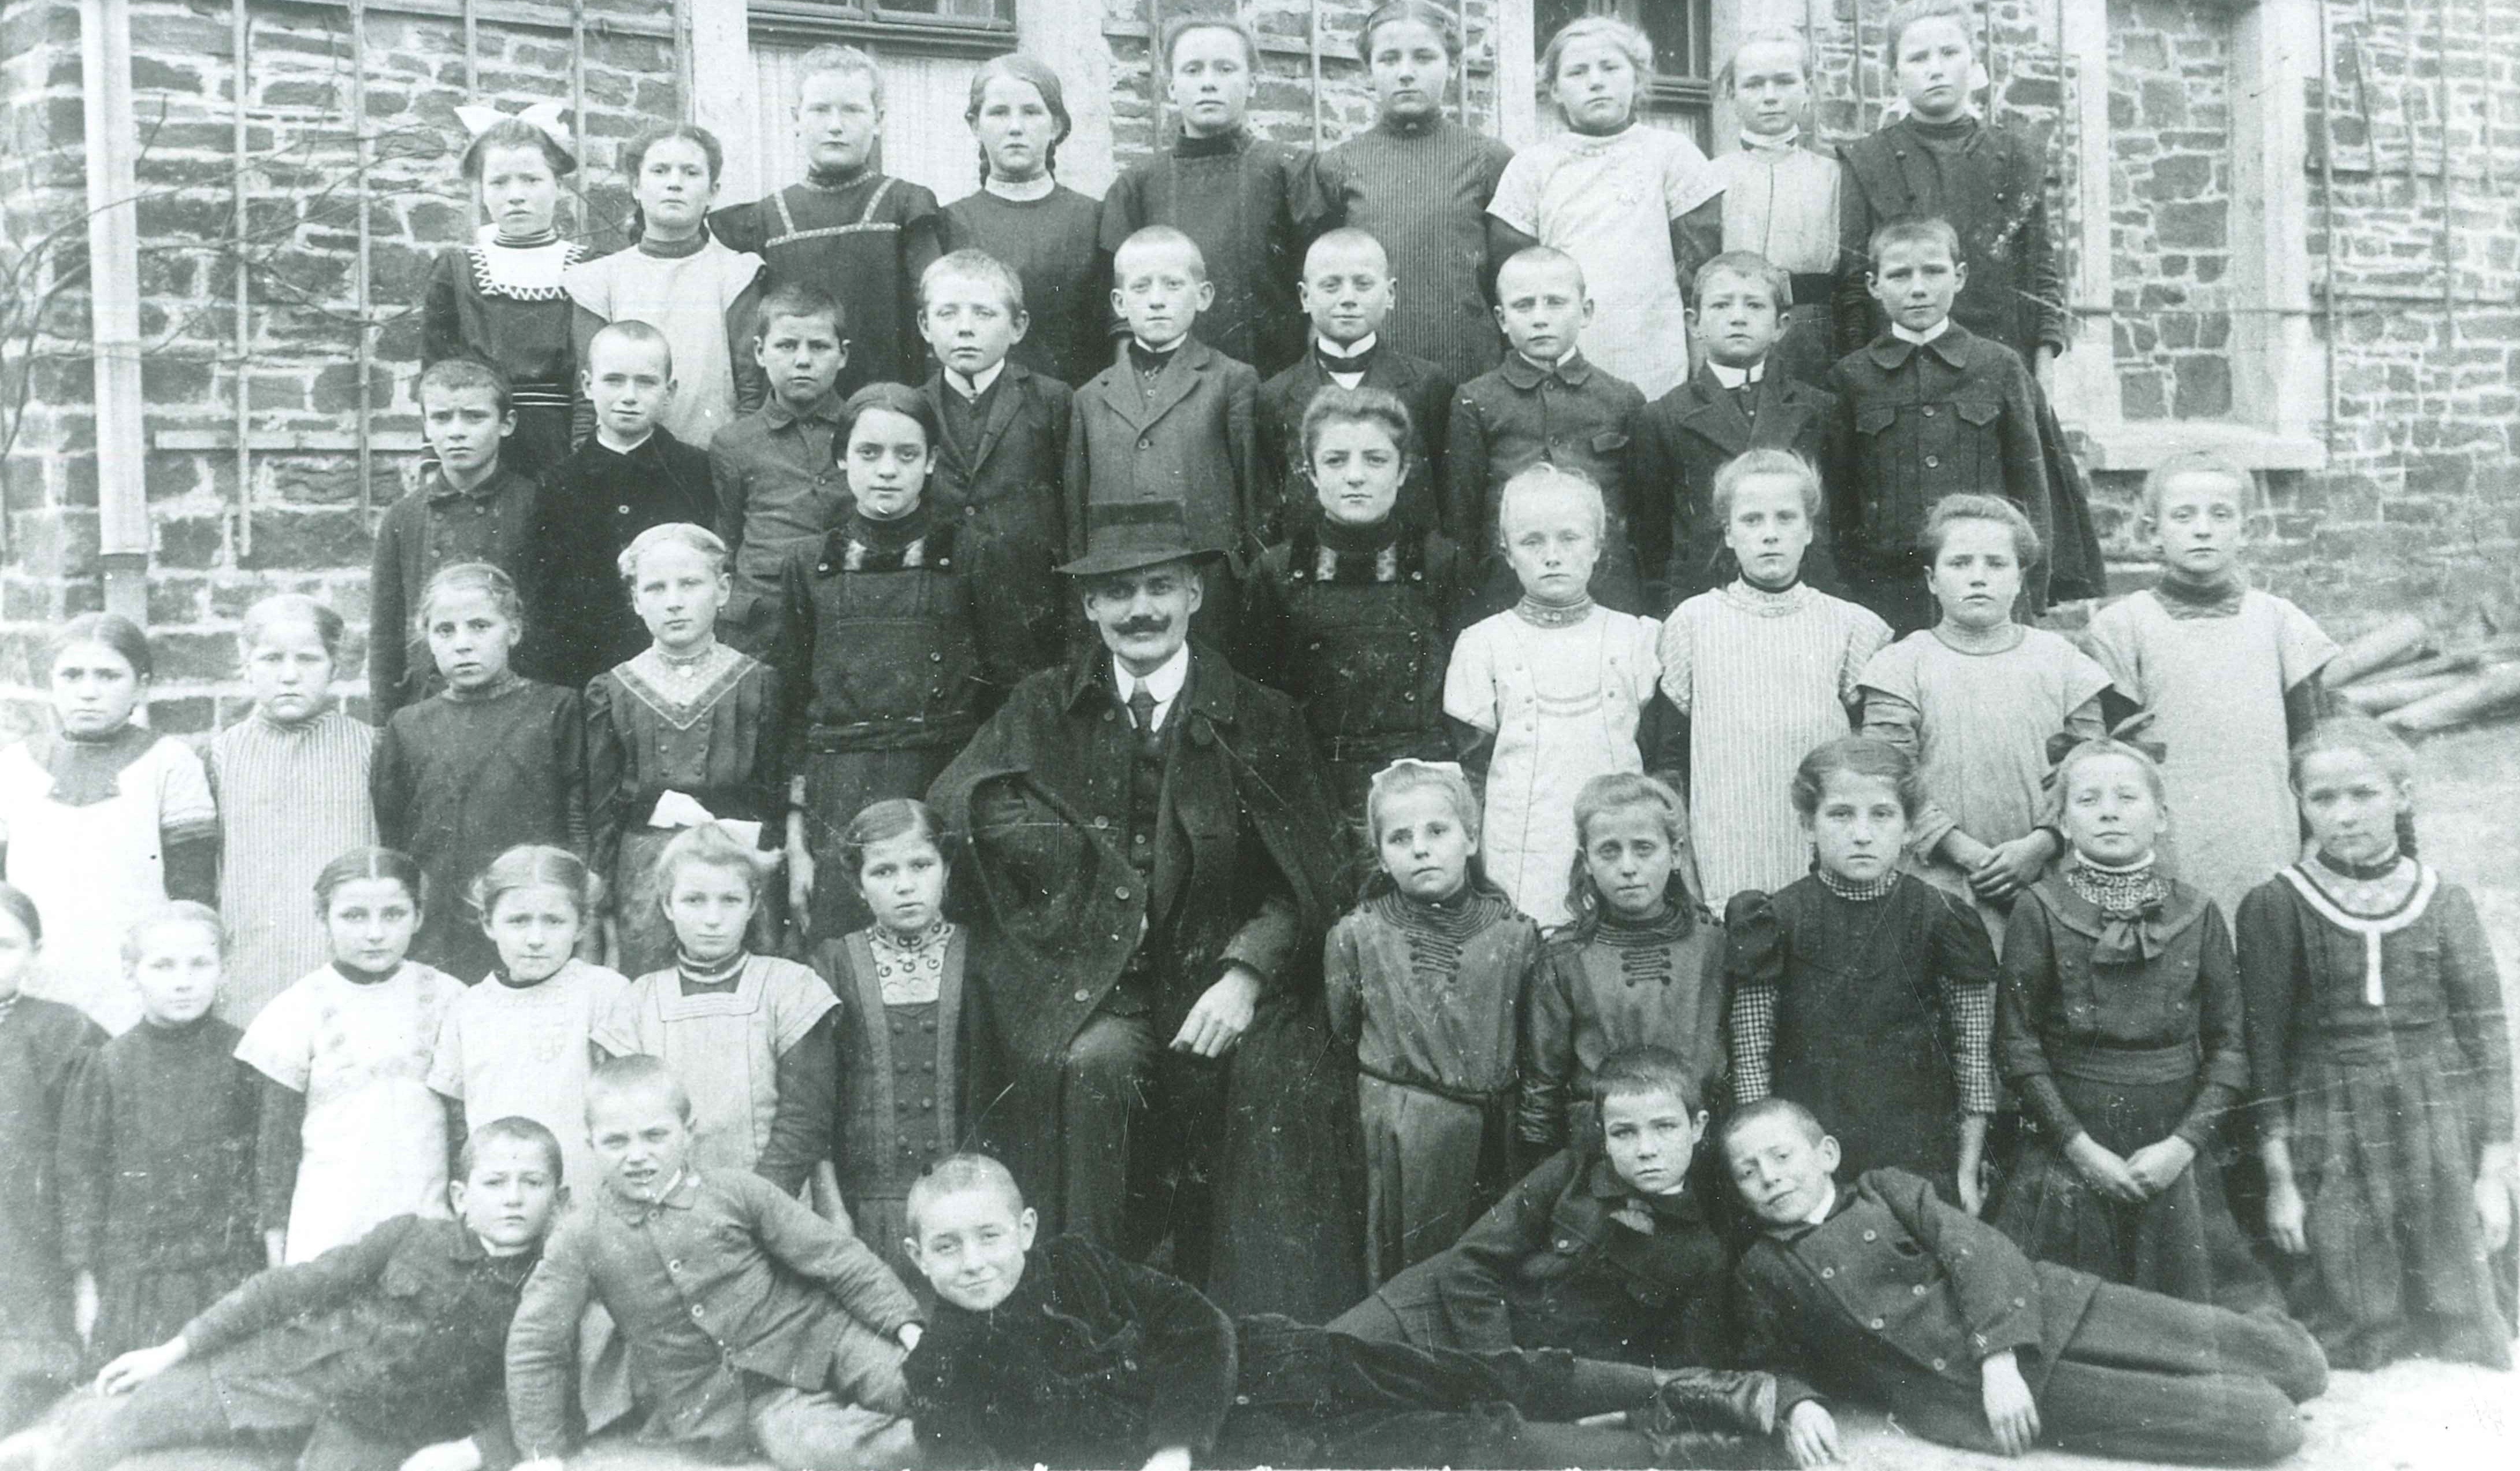 Klassenfoto, Katholische Schule "Schönblick", Bendorf-Stromberg, 1913 (REM CC BY-NC-SA)